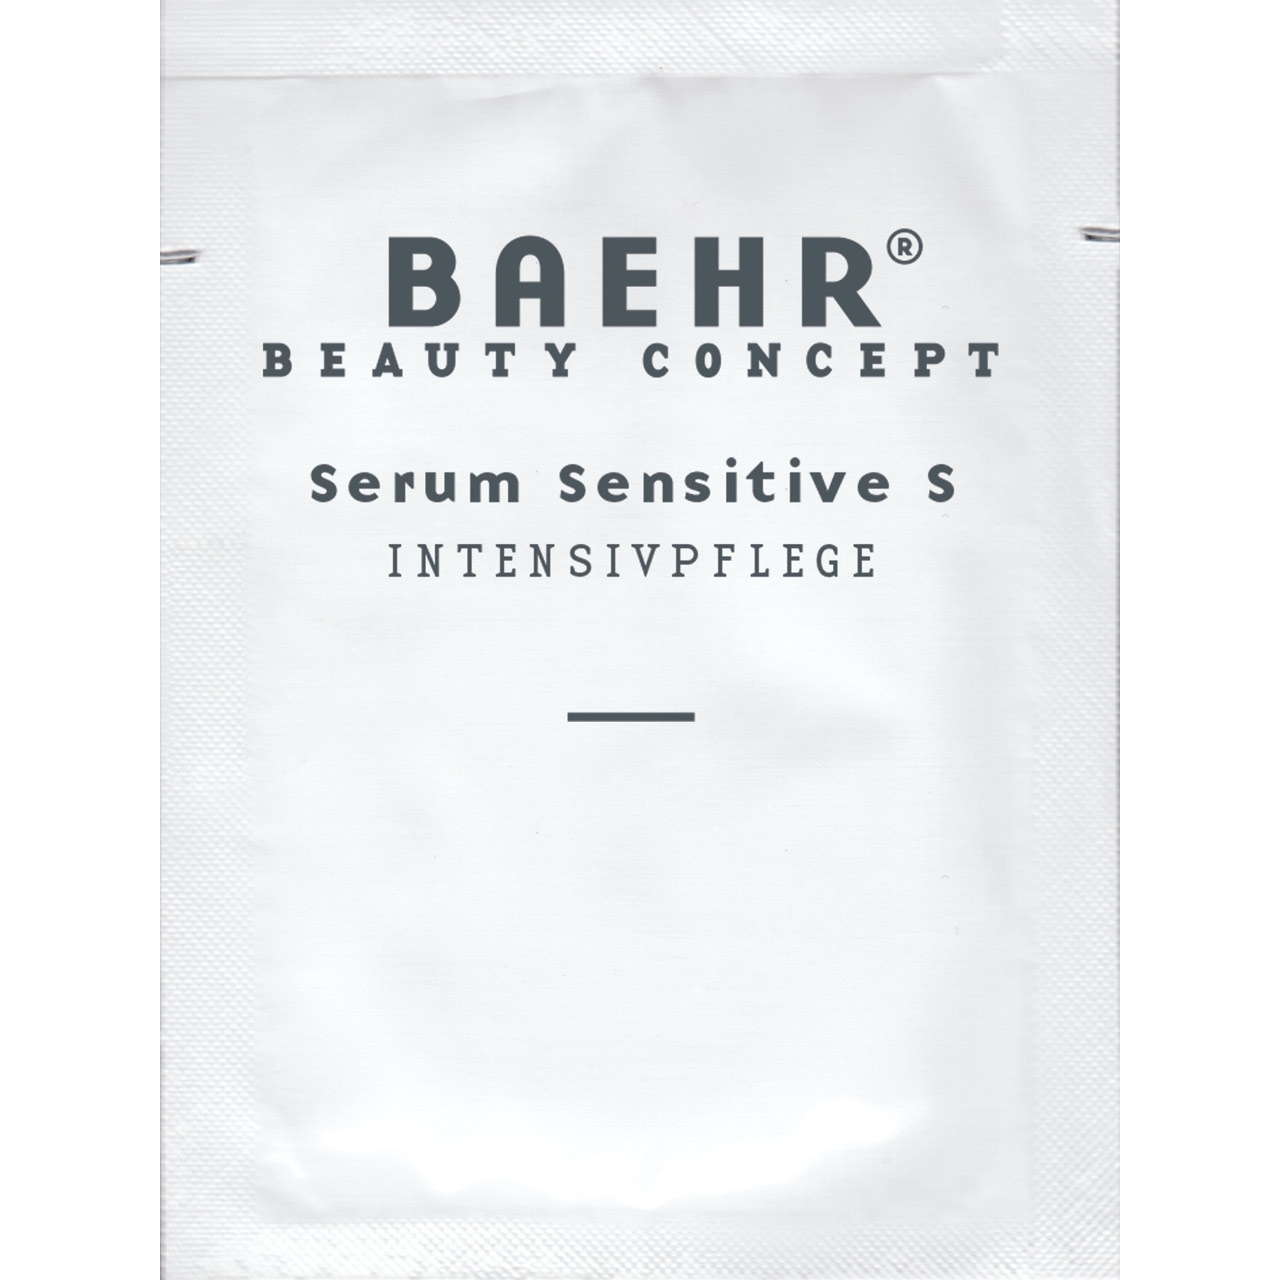 BAEHR BEAUTY CONCEPT - Serum sensitive S, Probe, 1 Stk.